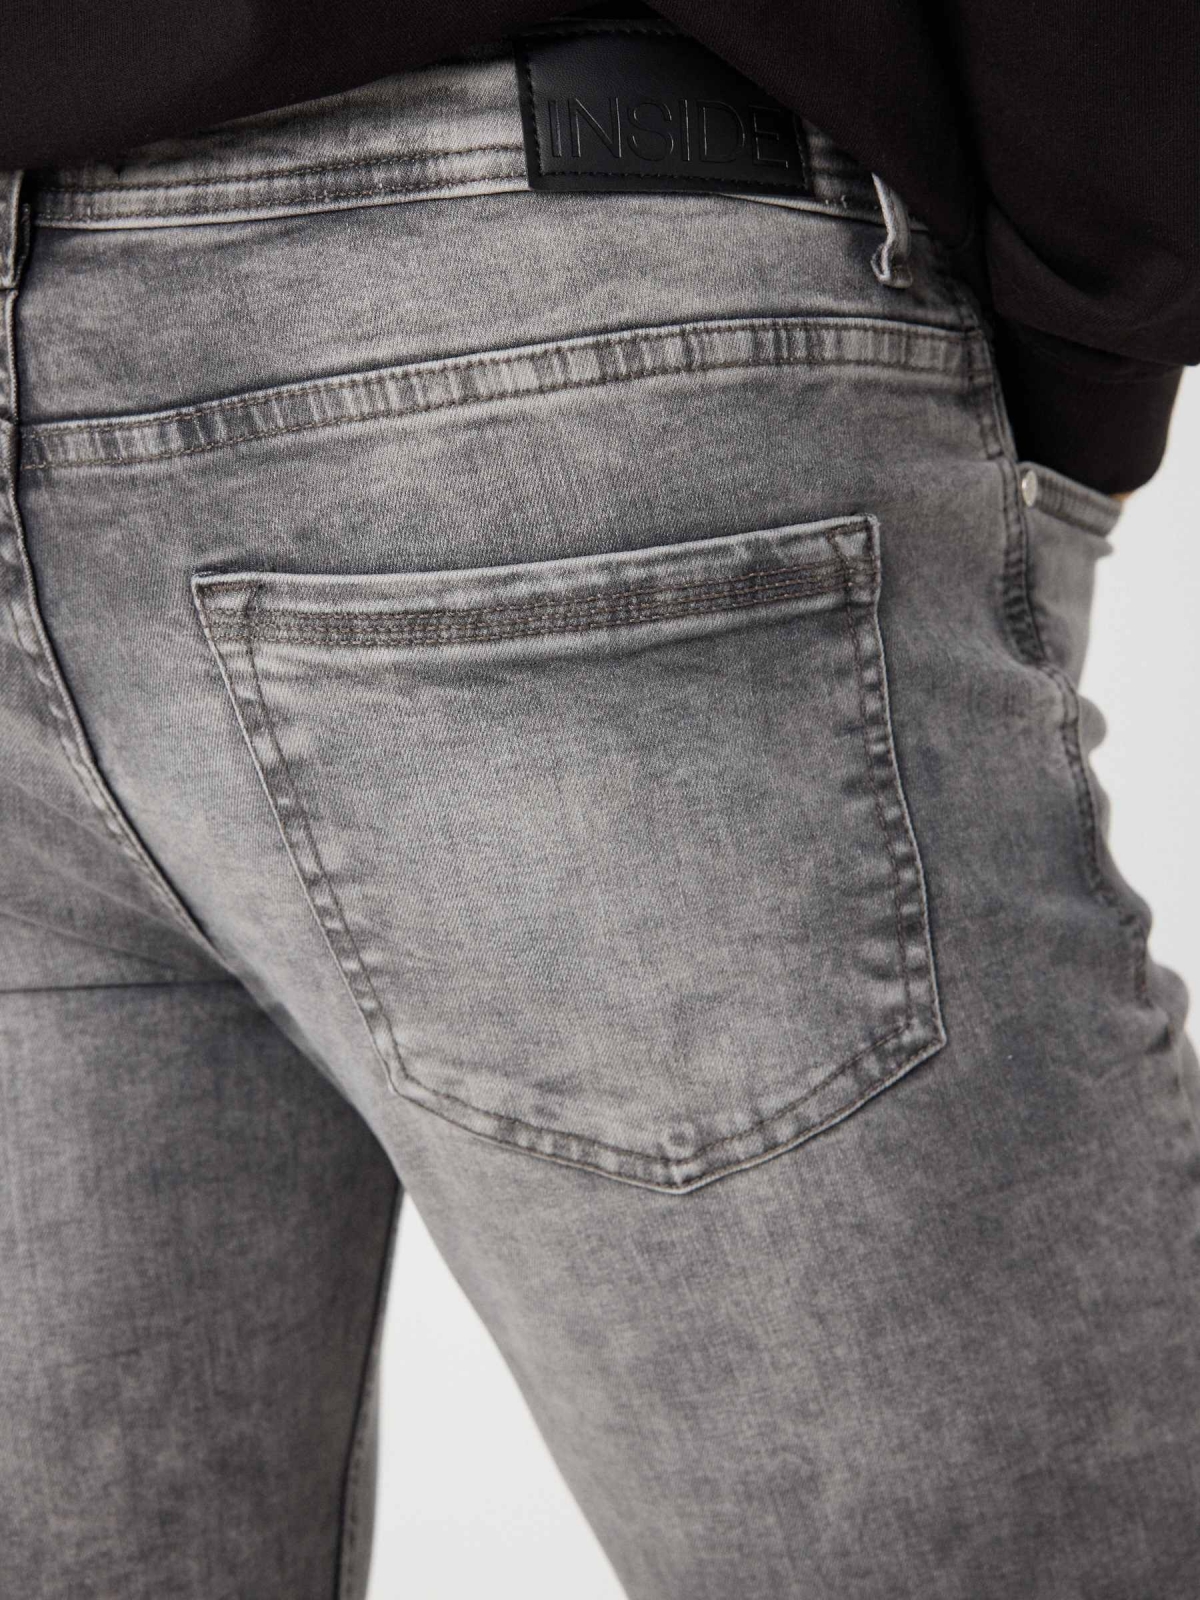 Jeans basico cinza vista detalhe